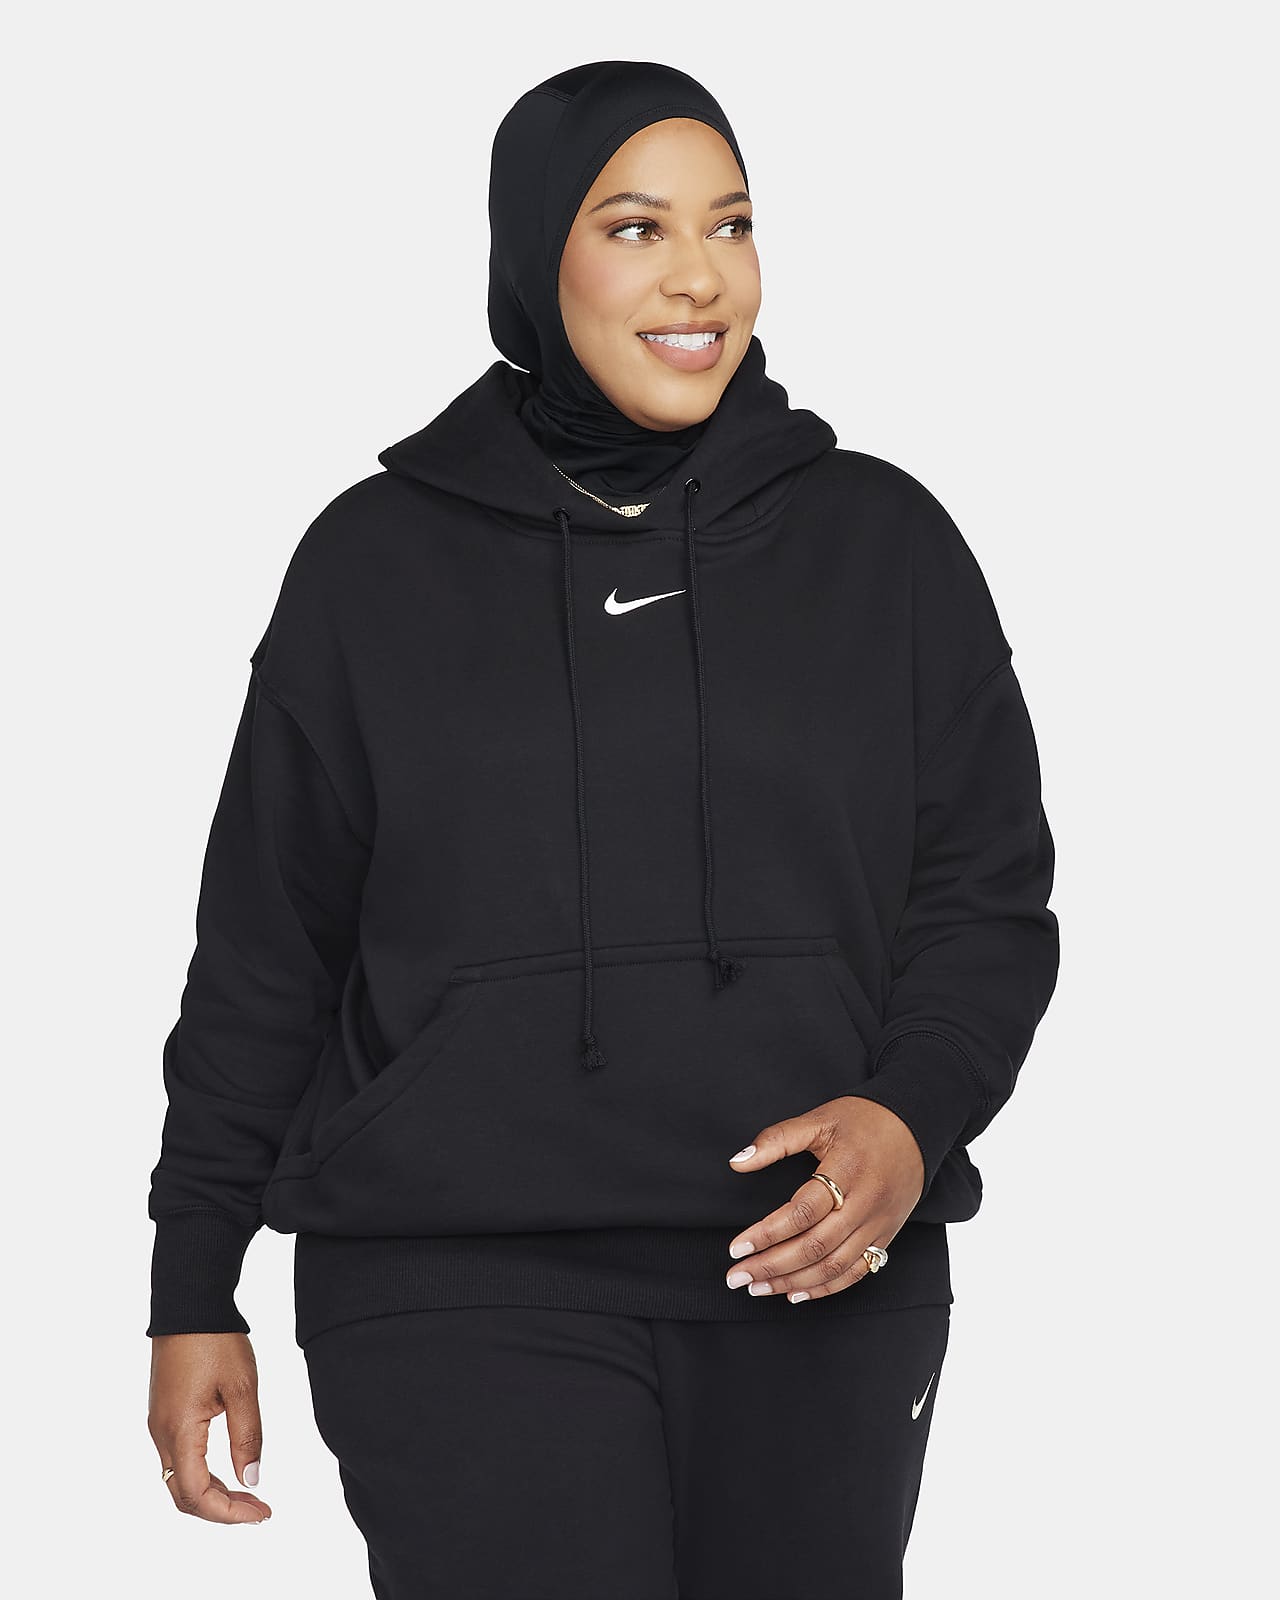 Nike Sportswear Phoenix Fleece Sudadera con capucha y ajuste oversize - Mujer